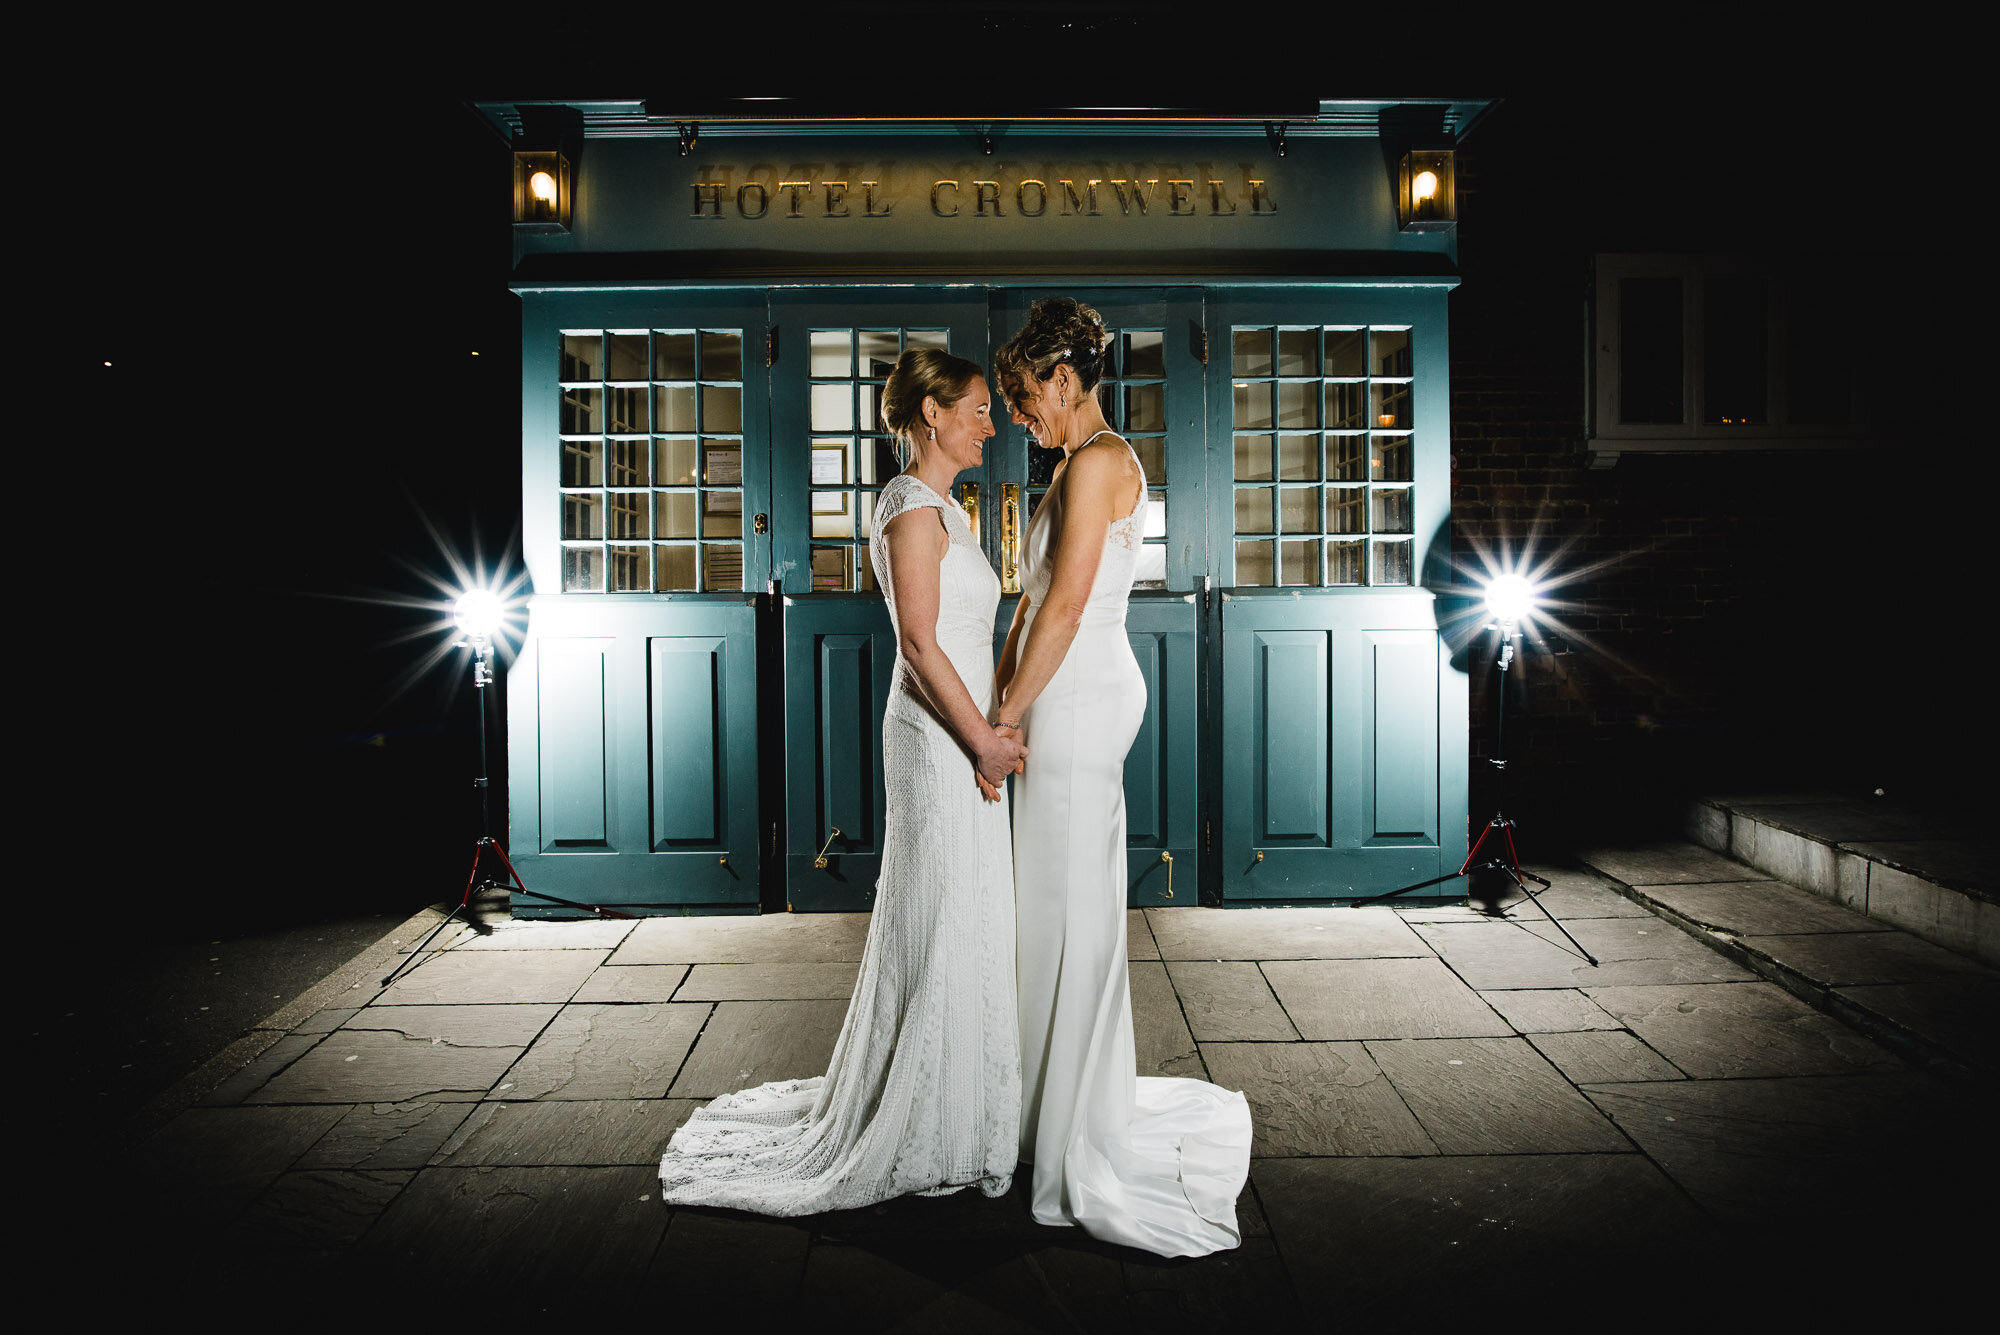 same-sex-wedding-hotel-cromwell-stevenage-hertfordshire-pike-photography-2020-12.jpg